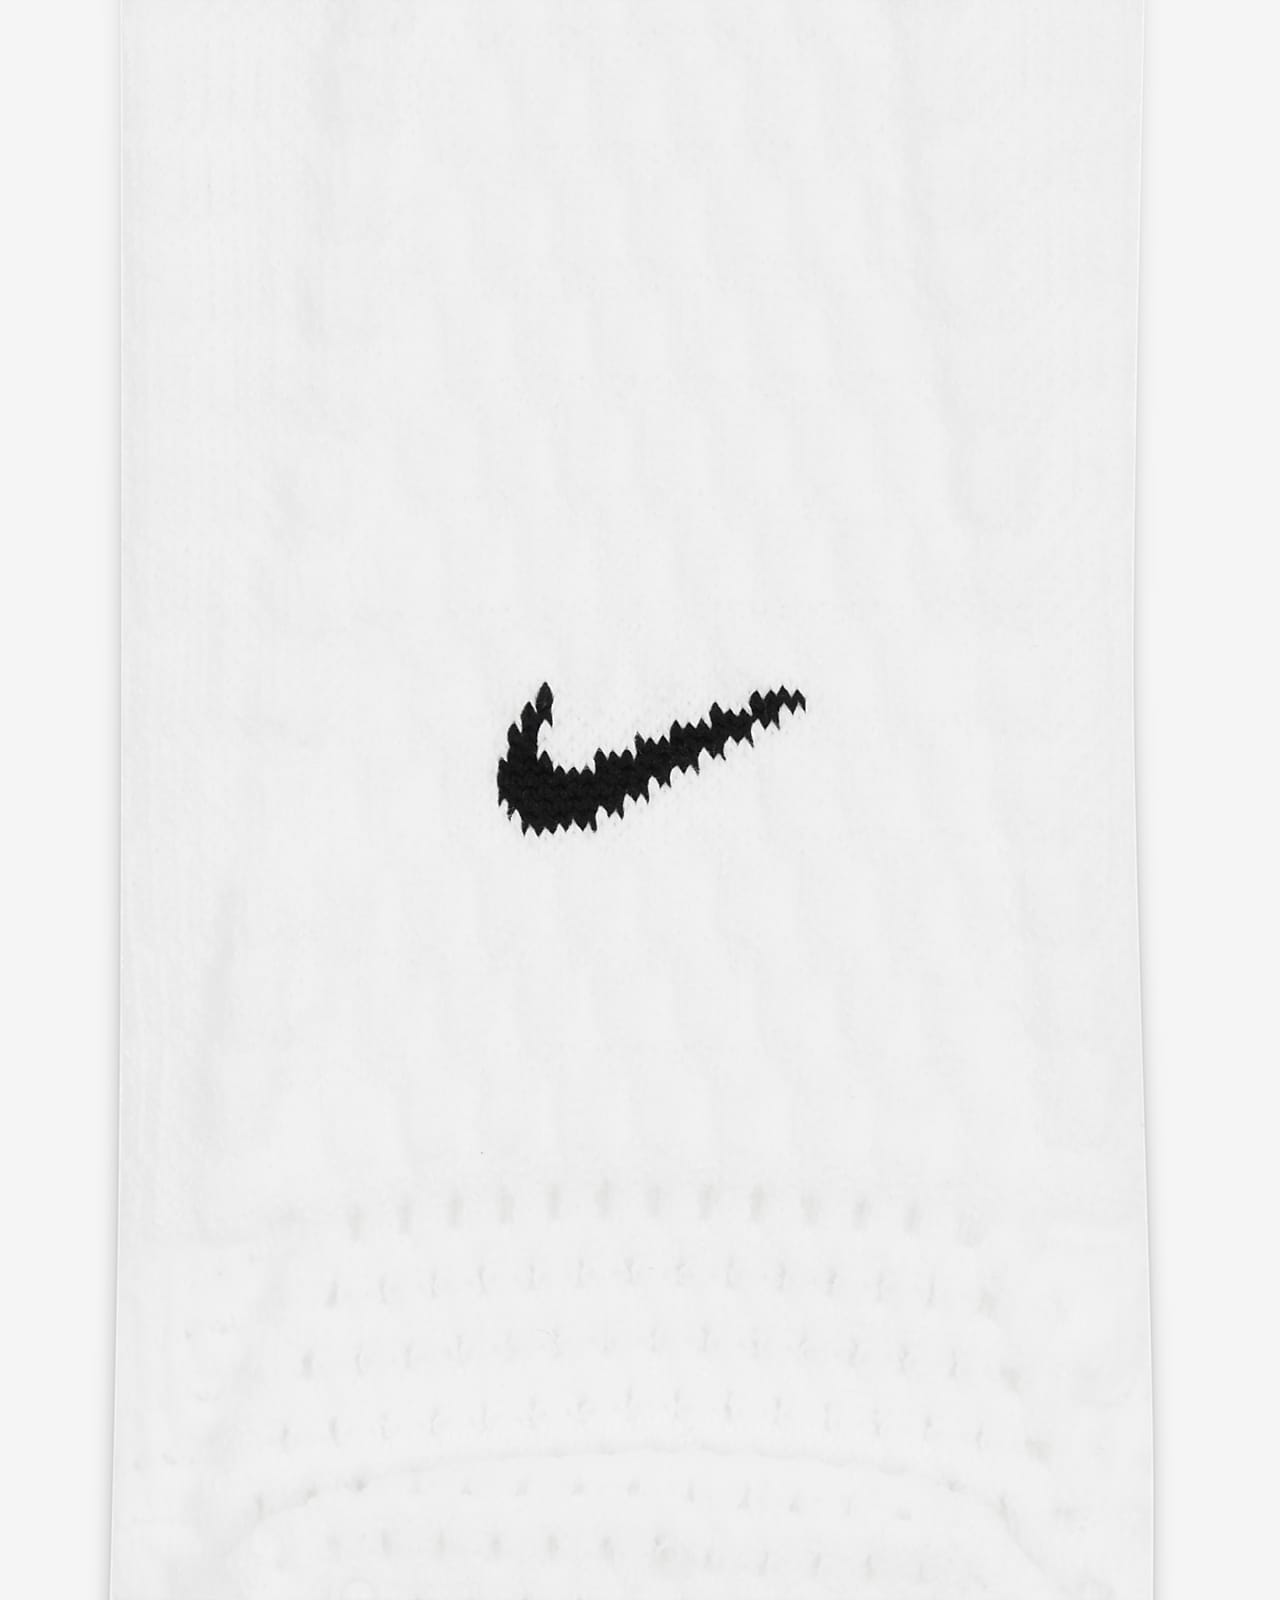 Nike Unicorn Dri-FIT ADV Cushioned Crew Socks (1 Pair)